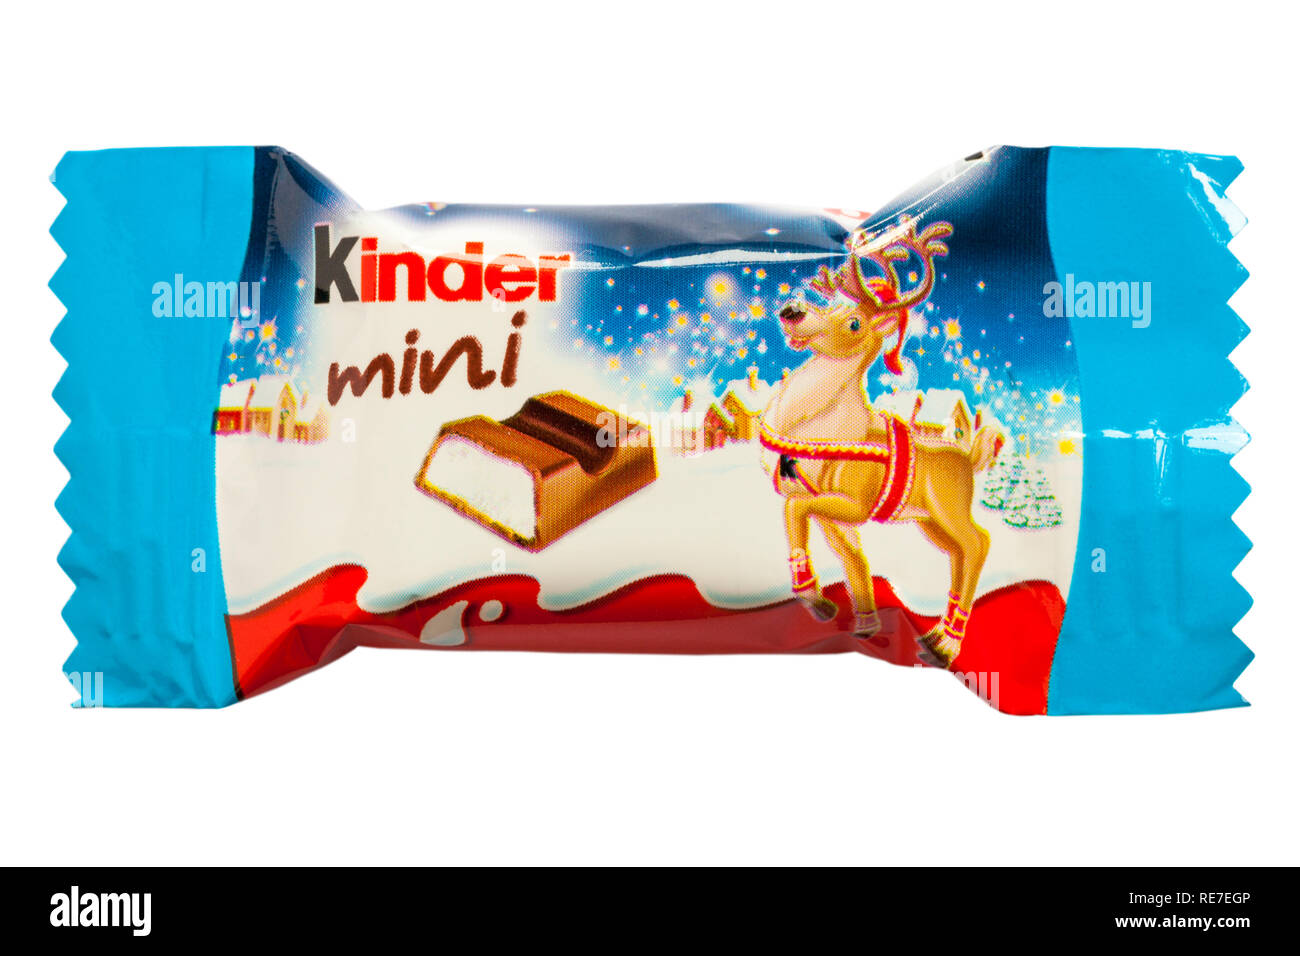 Kinder chocolate mini bar hi-res stock photography and images - Alamy